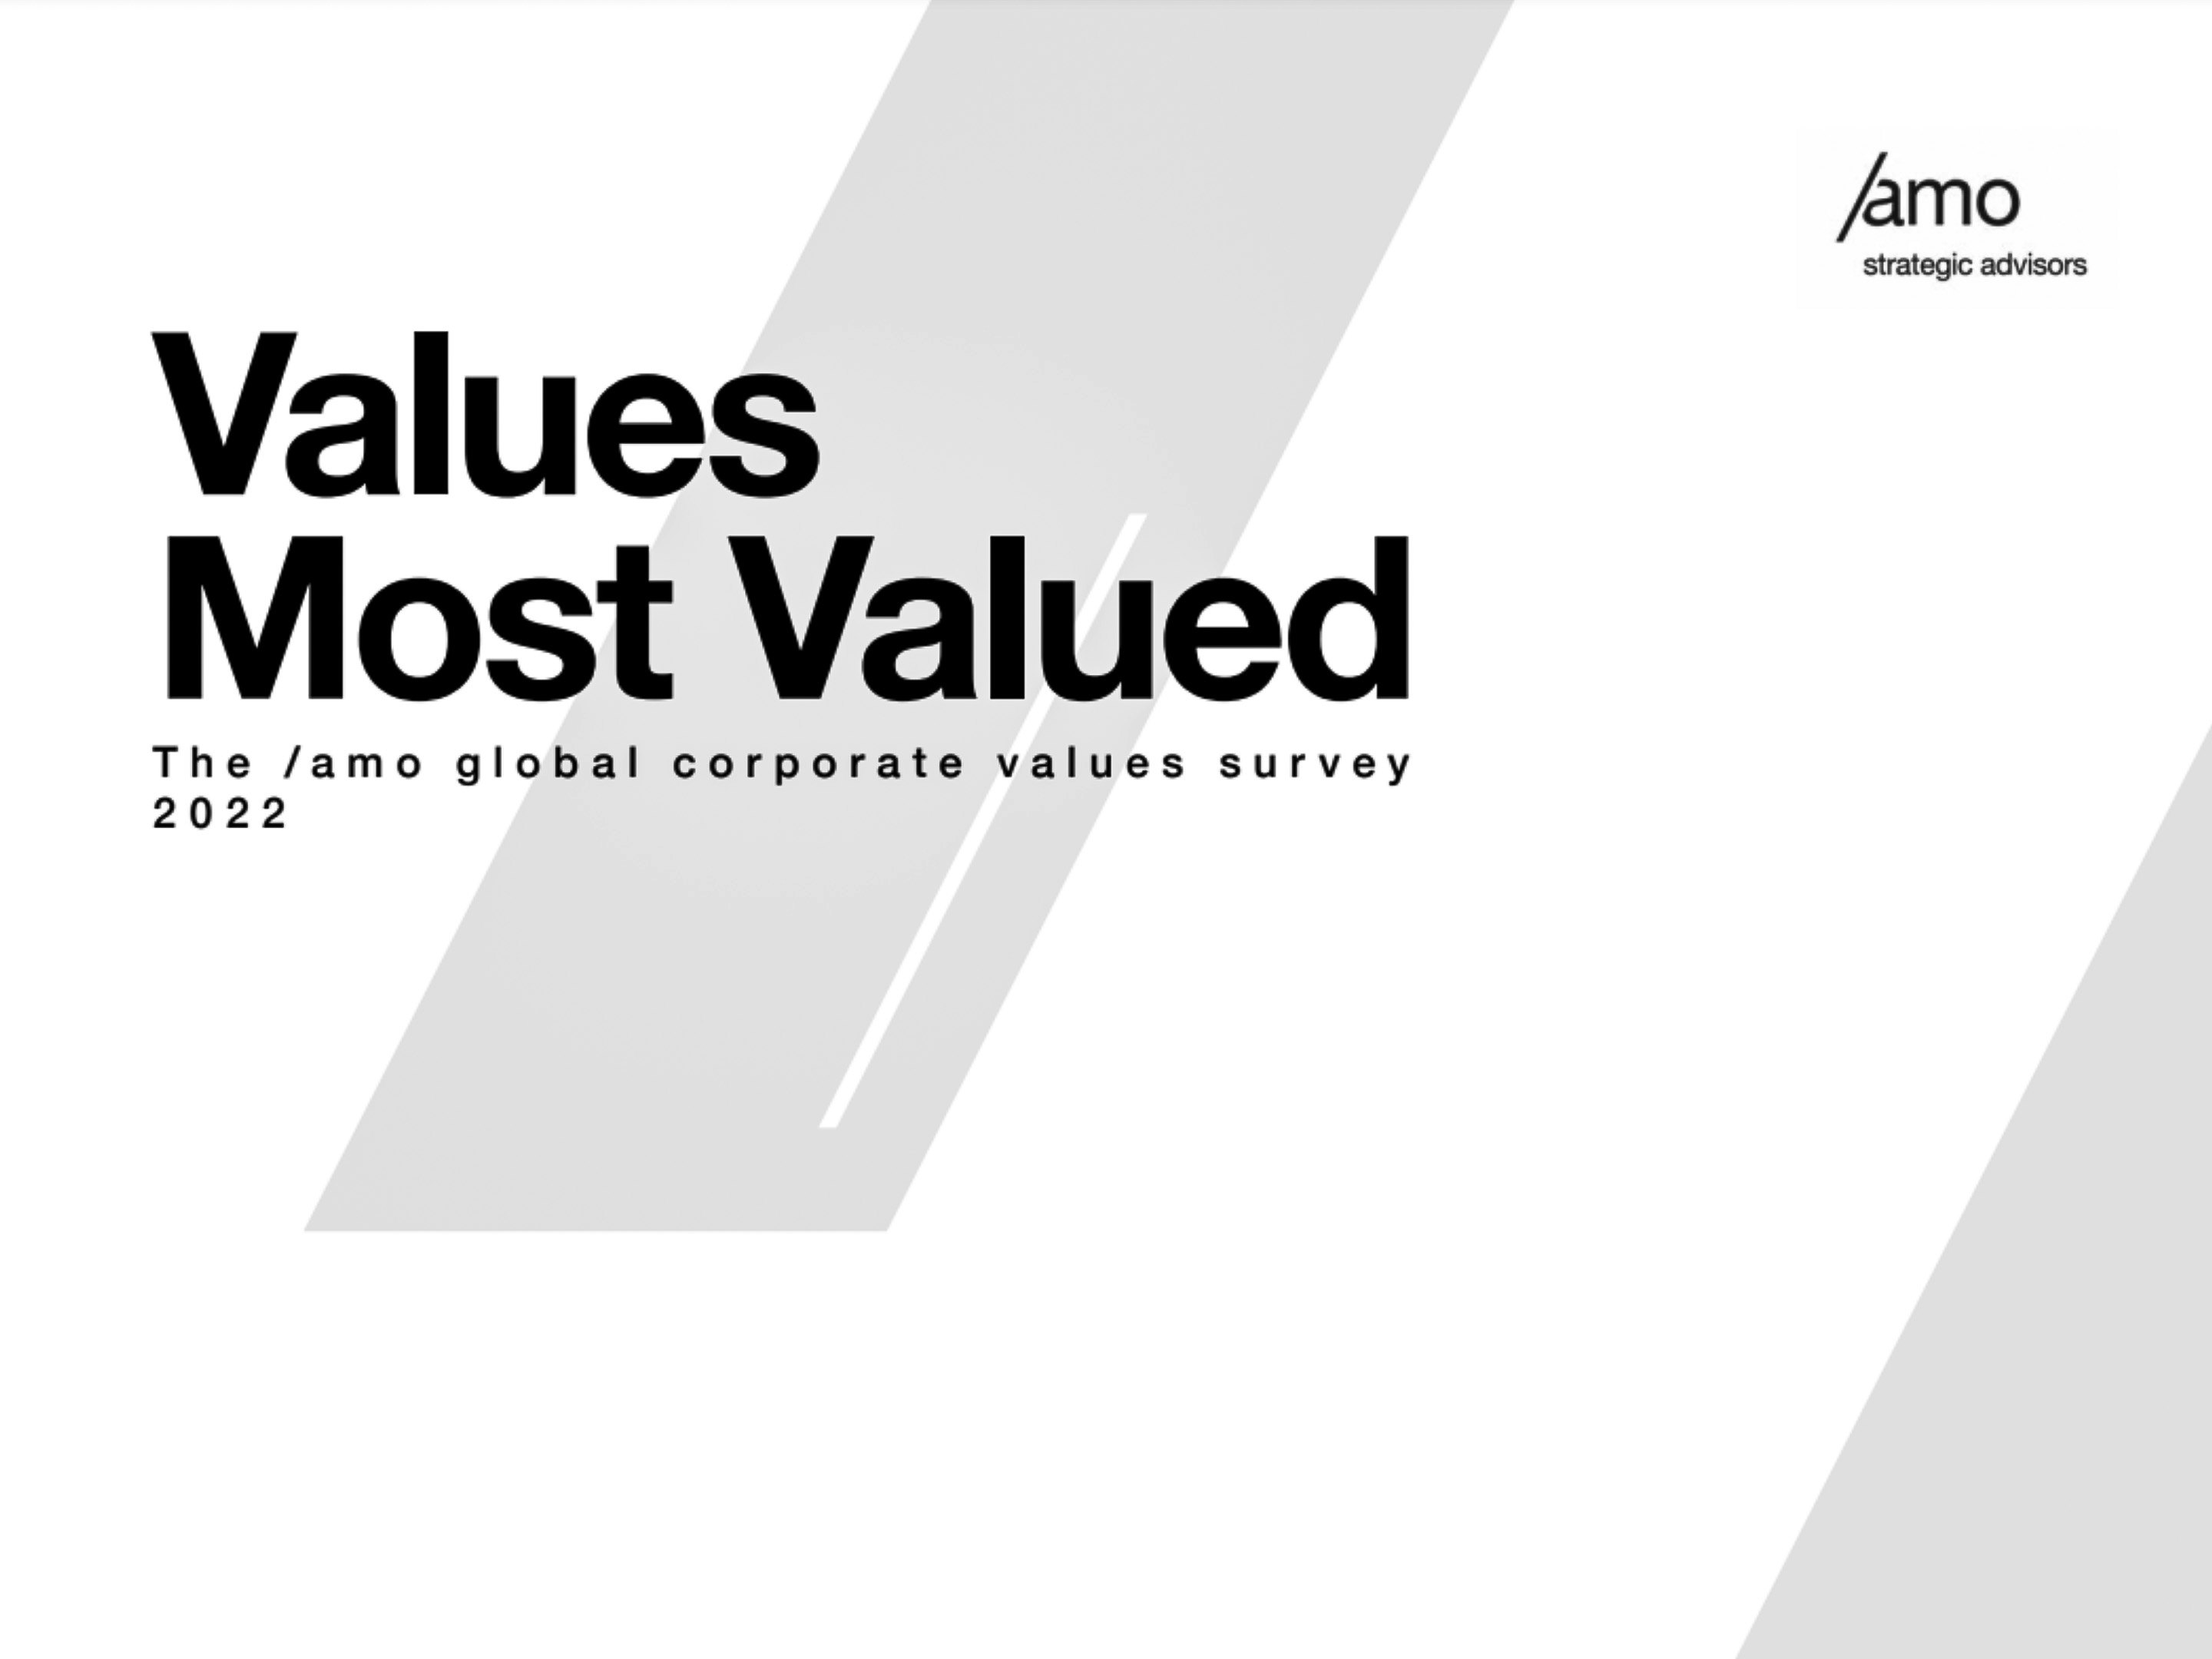 /amo global corporate values survey 2022